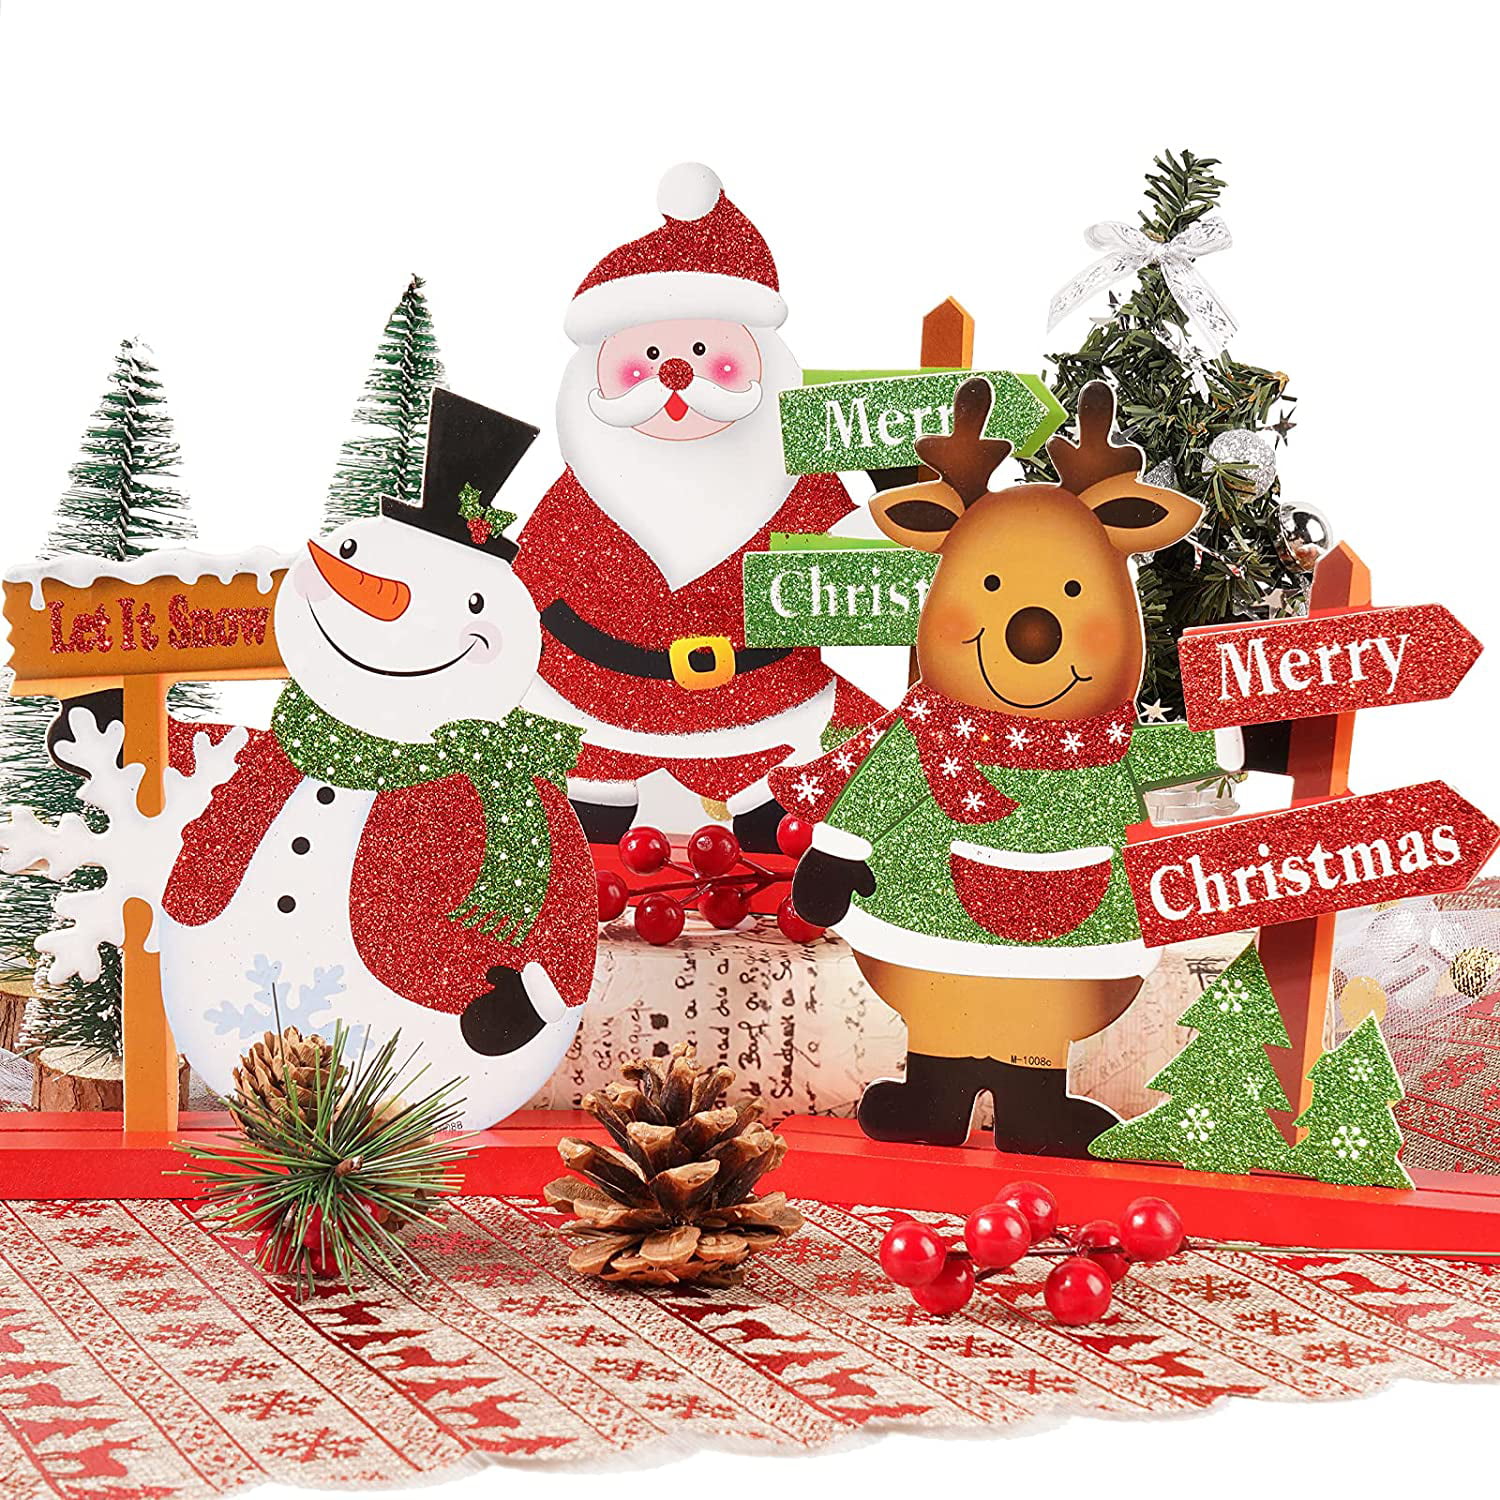 3PCS Lovely Christmas Party Hanging Decor Santa Claus Snowman Xmas Ornaments HOT 